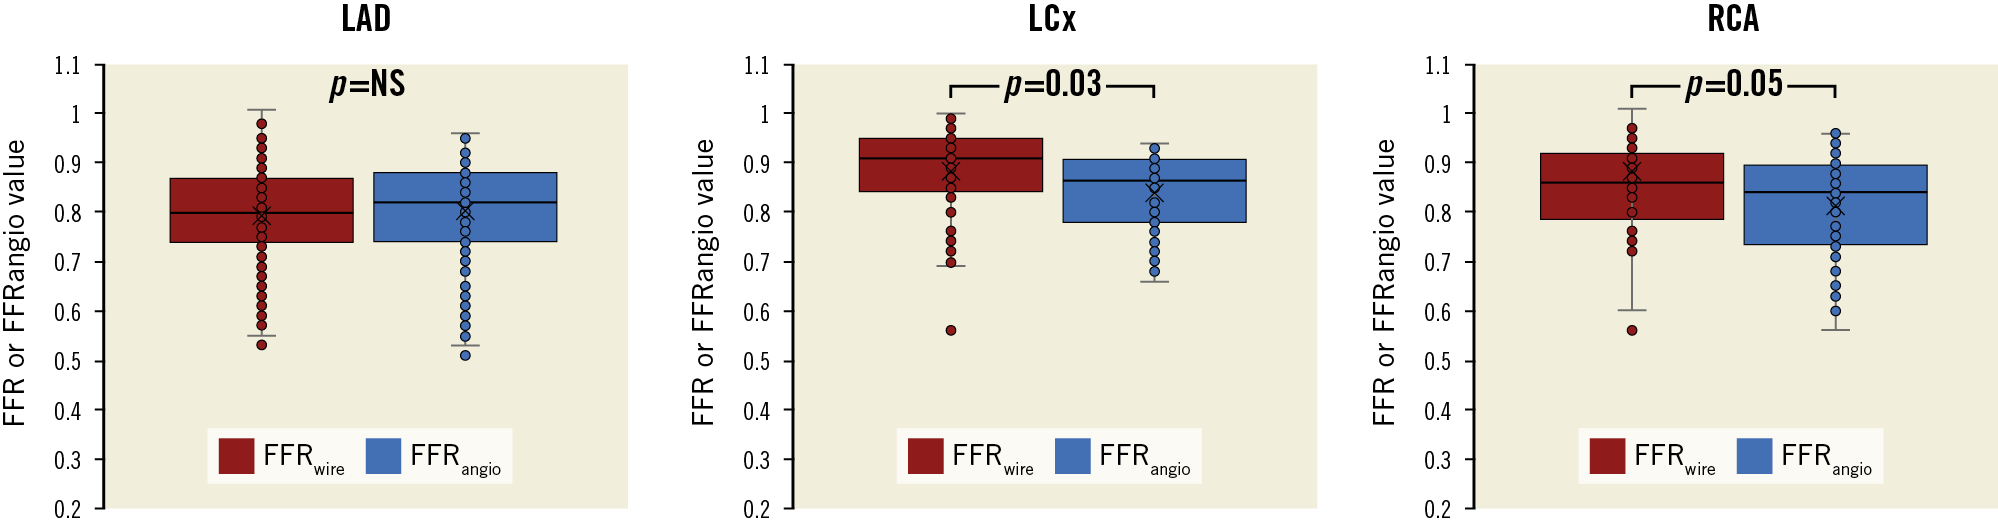 Figure 2. Comparison of FFRwire and FFRangio values according to vessels.